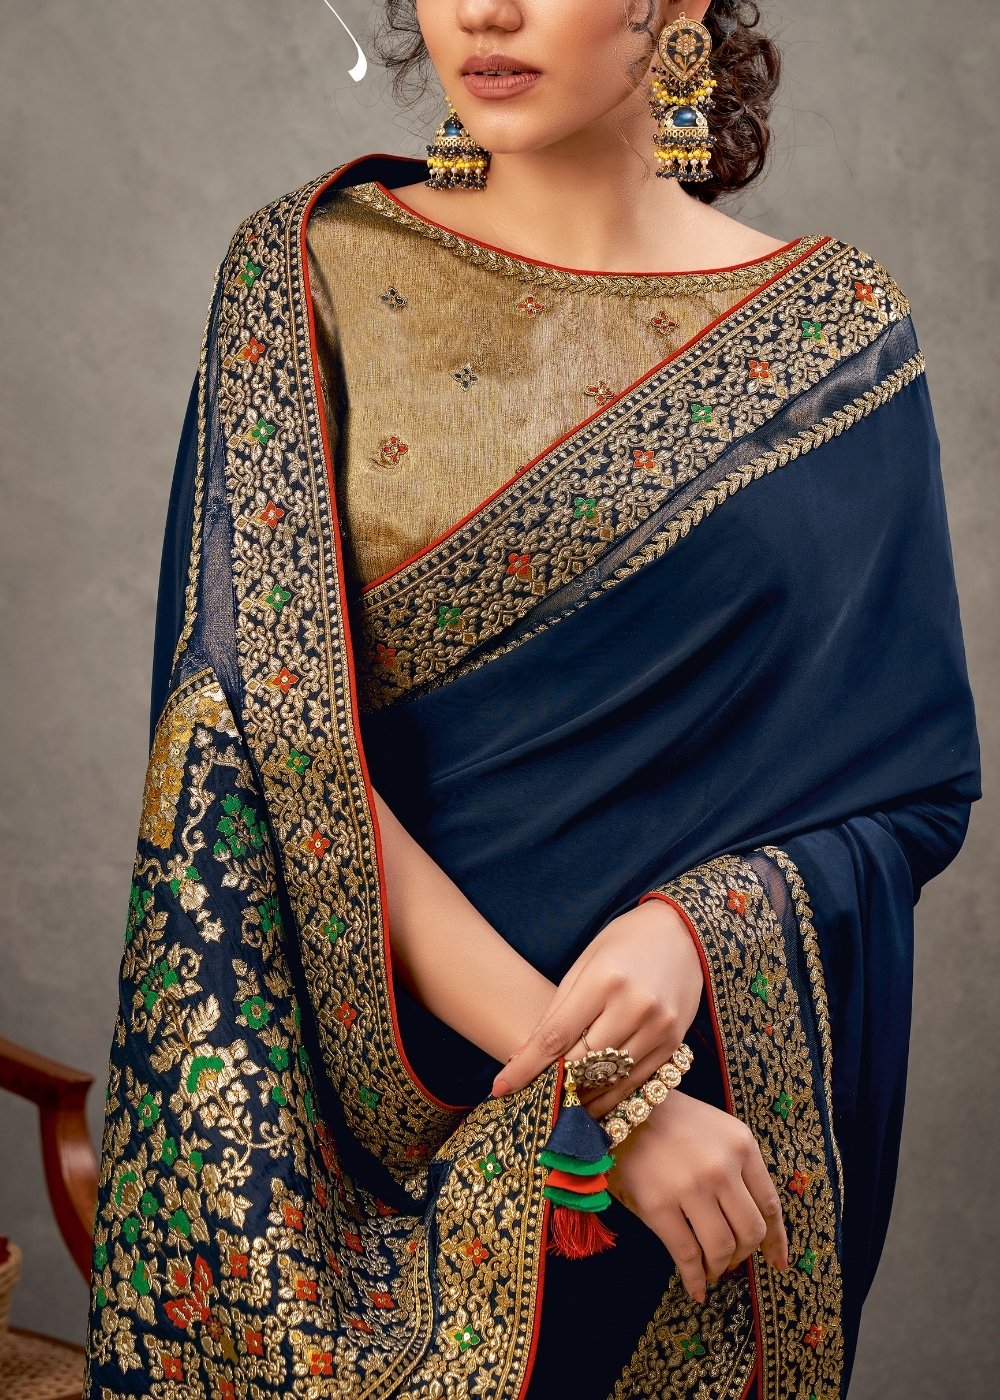 Navy Blue Satin Silk Saree with Thread & Cord Embroidery